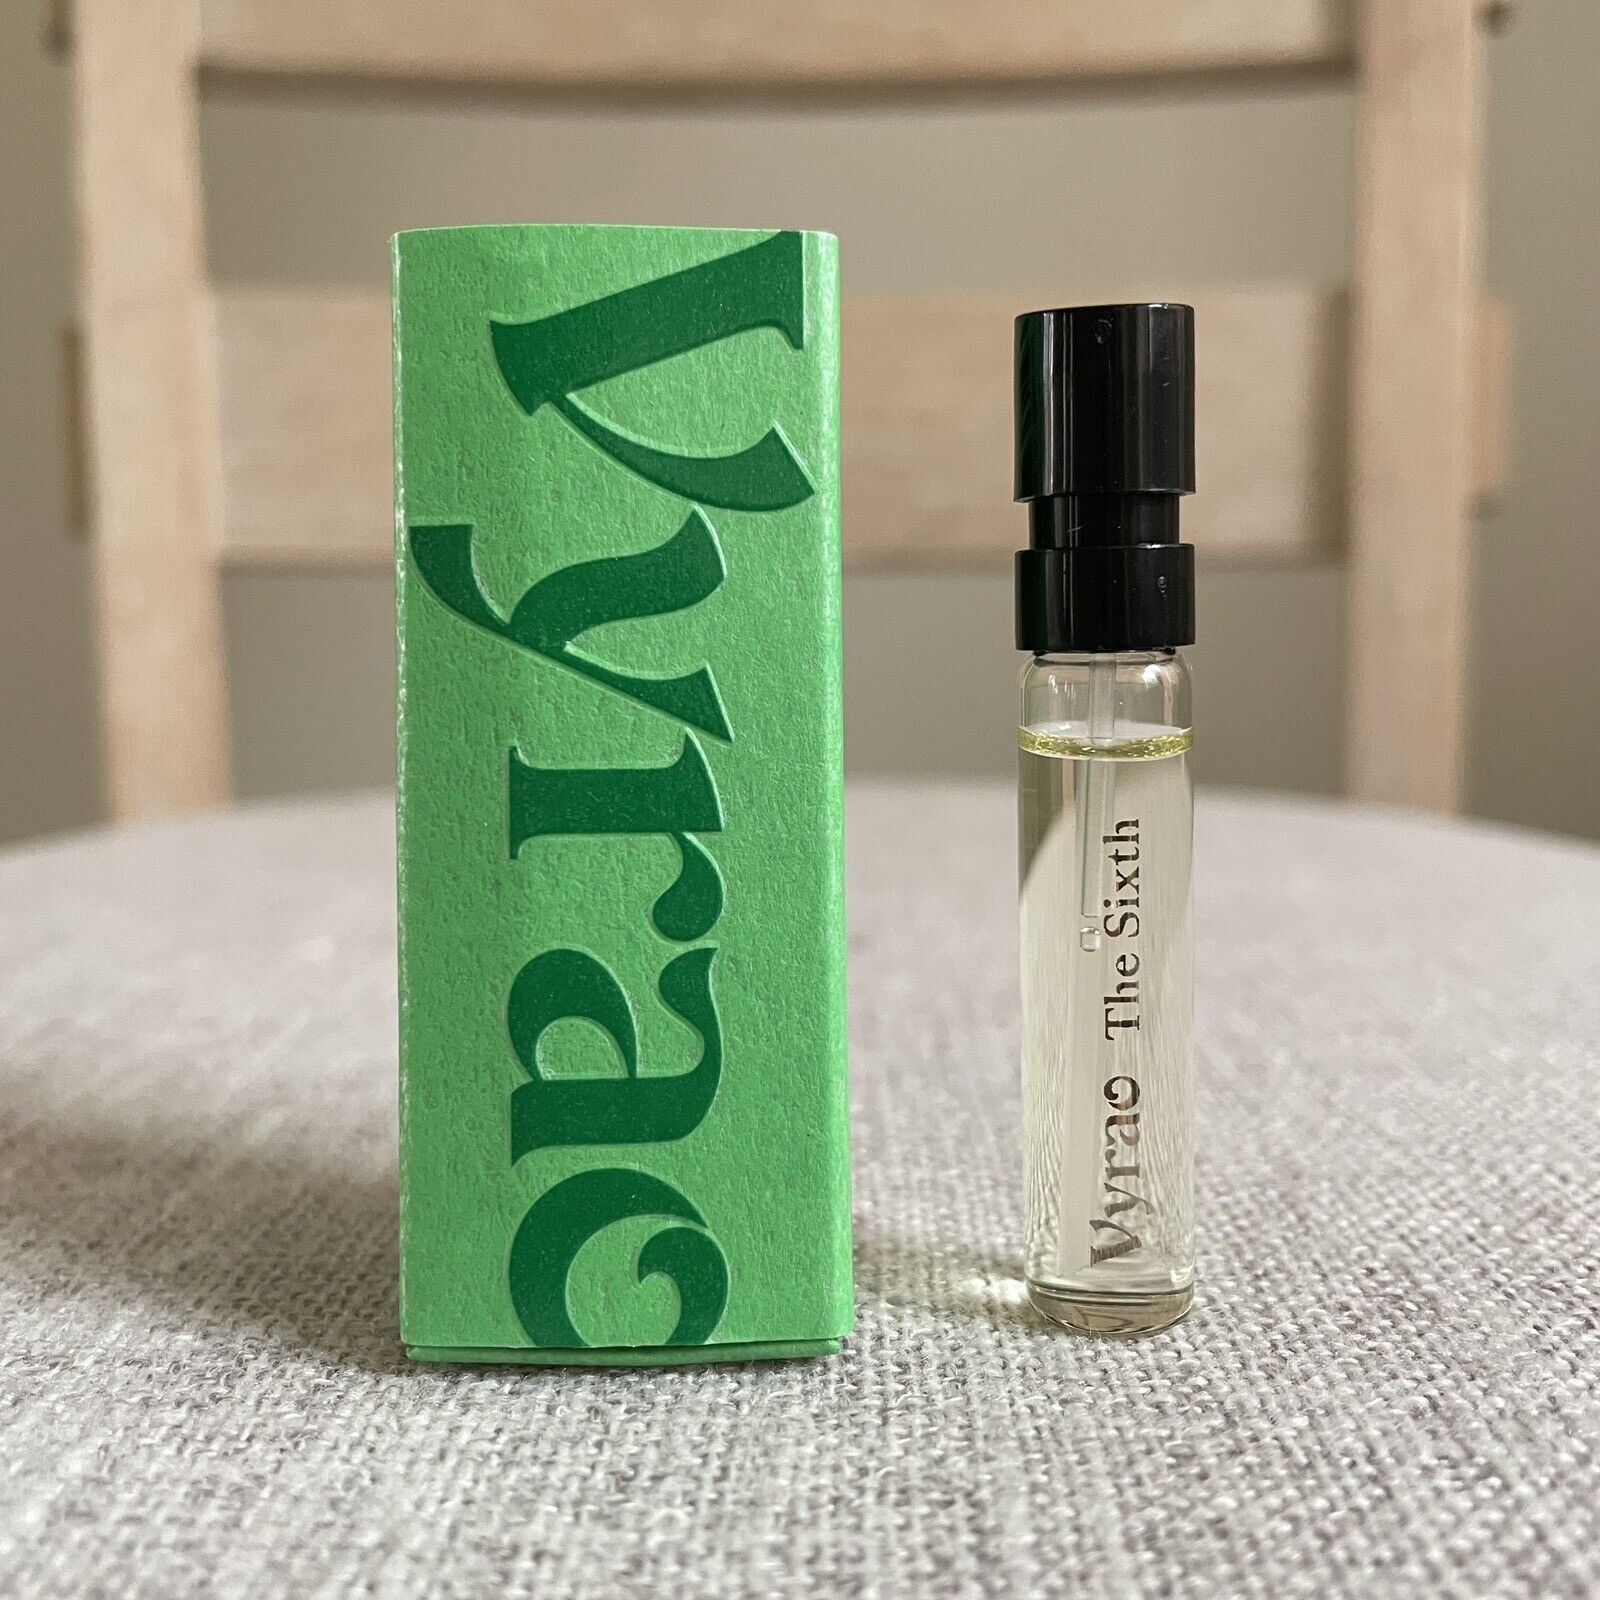 Vyrao THE SIXTH Eau De Parfum EDP 0.96 fl.oz. 2 ml. Mini Sample Size New in Box